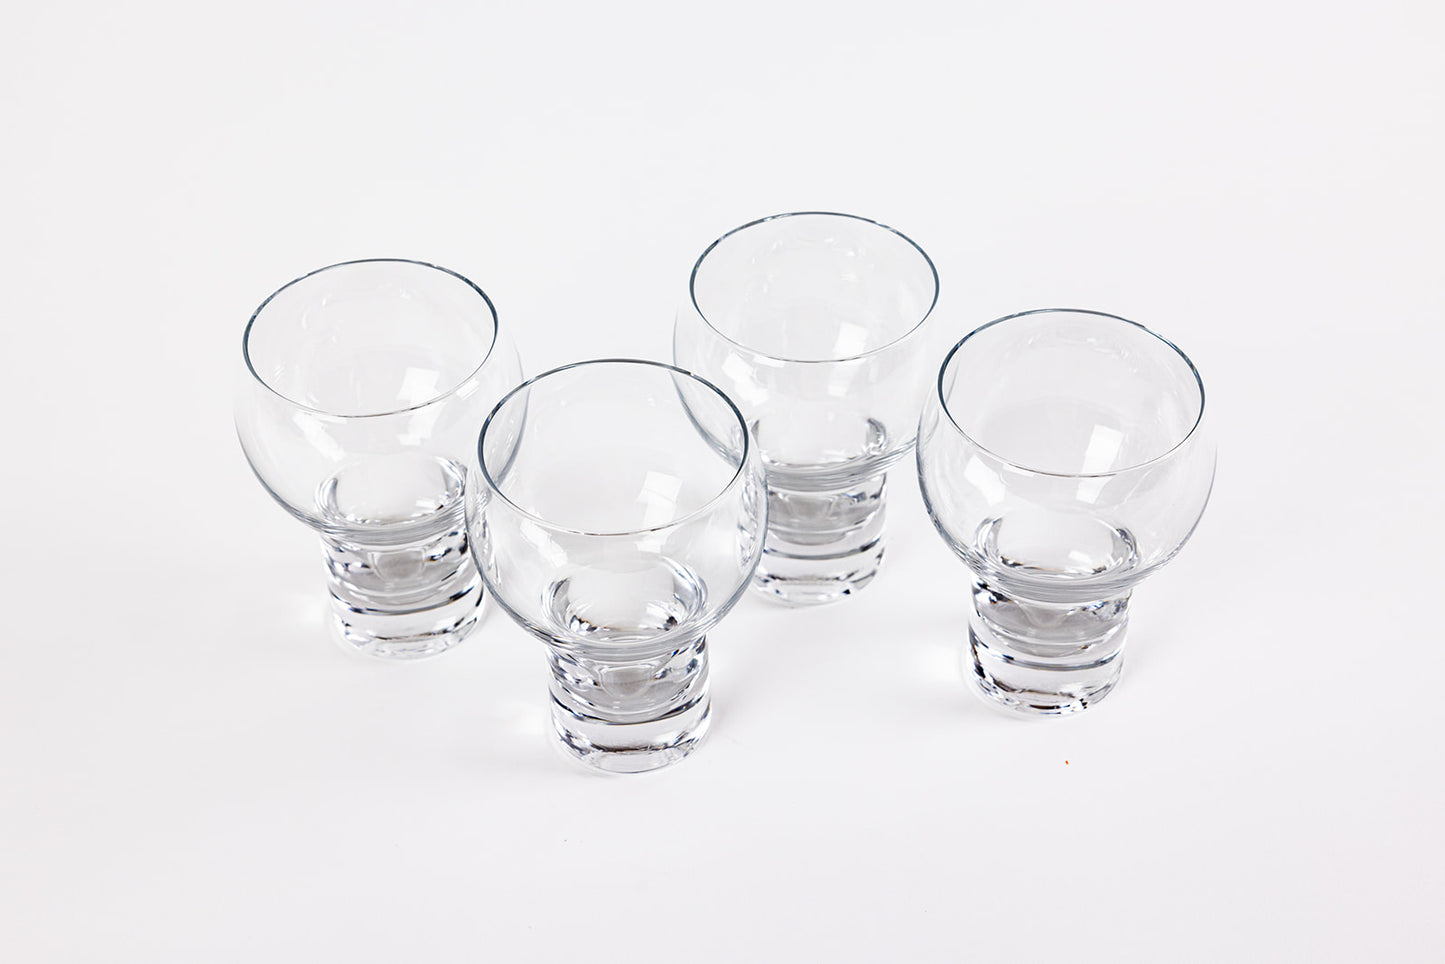 Cocktail Glasses - Set of 4